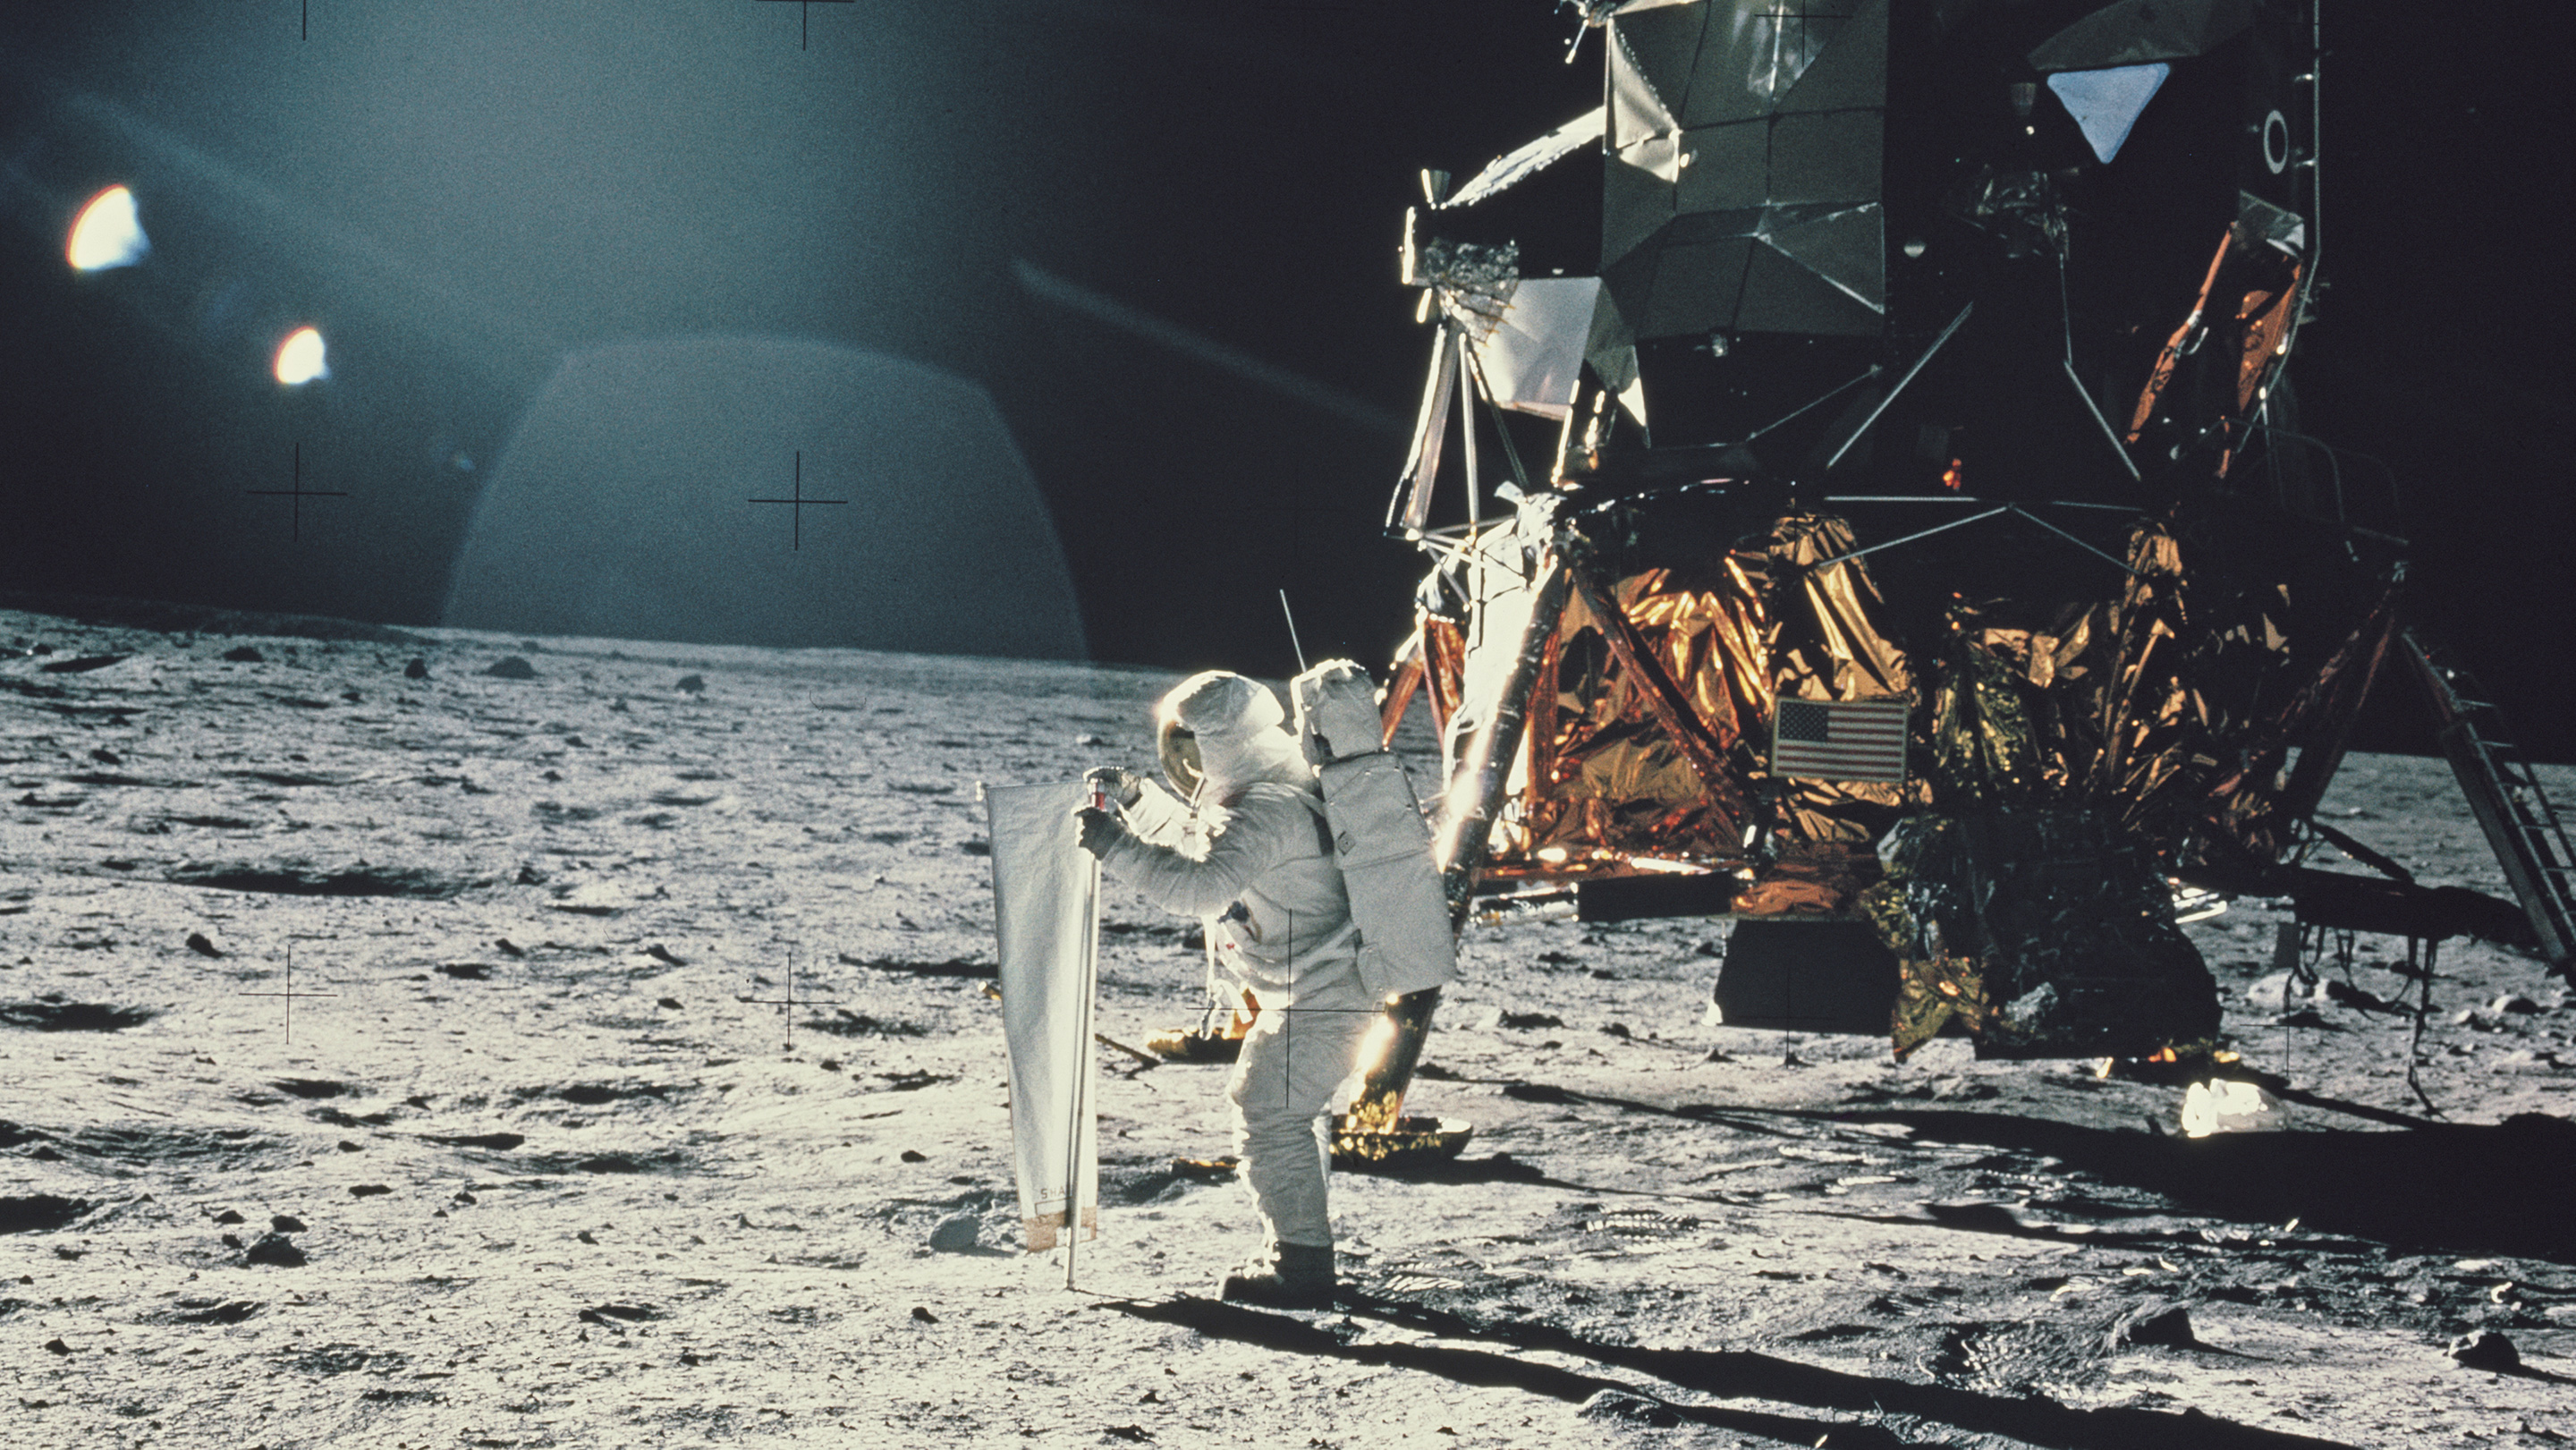 Высадка на корабль. Апполо 11 на Луне. Миссия Аполлон 11.